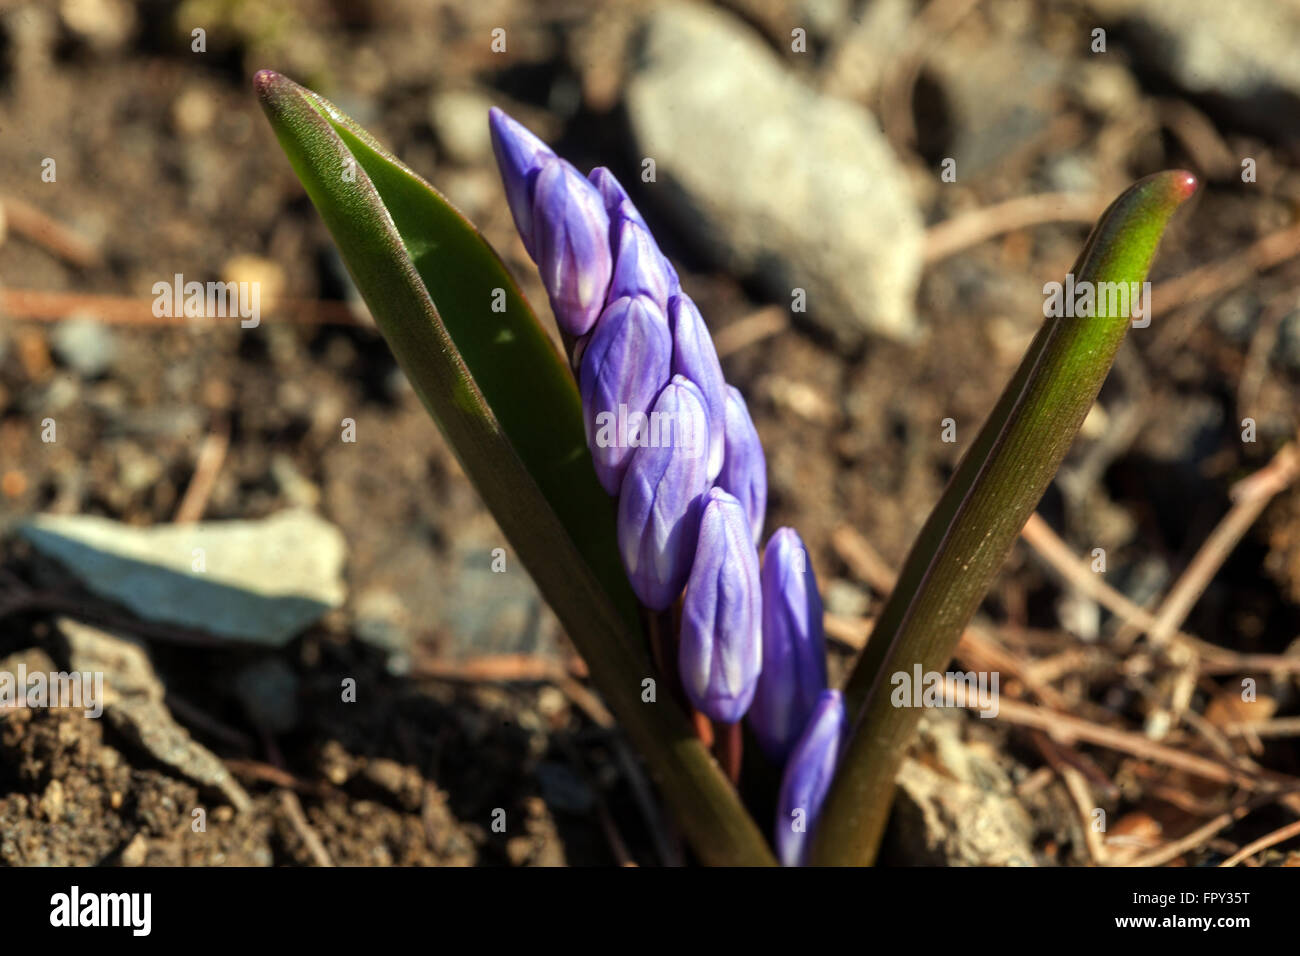 Scilla forbesii syn. Chionodoxa forbesii budding flower march flower opening flower growing on ground, bud Stock Photo